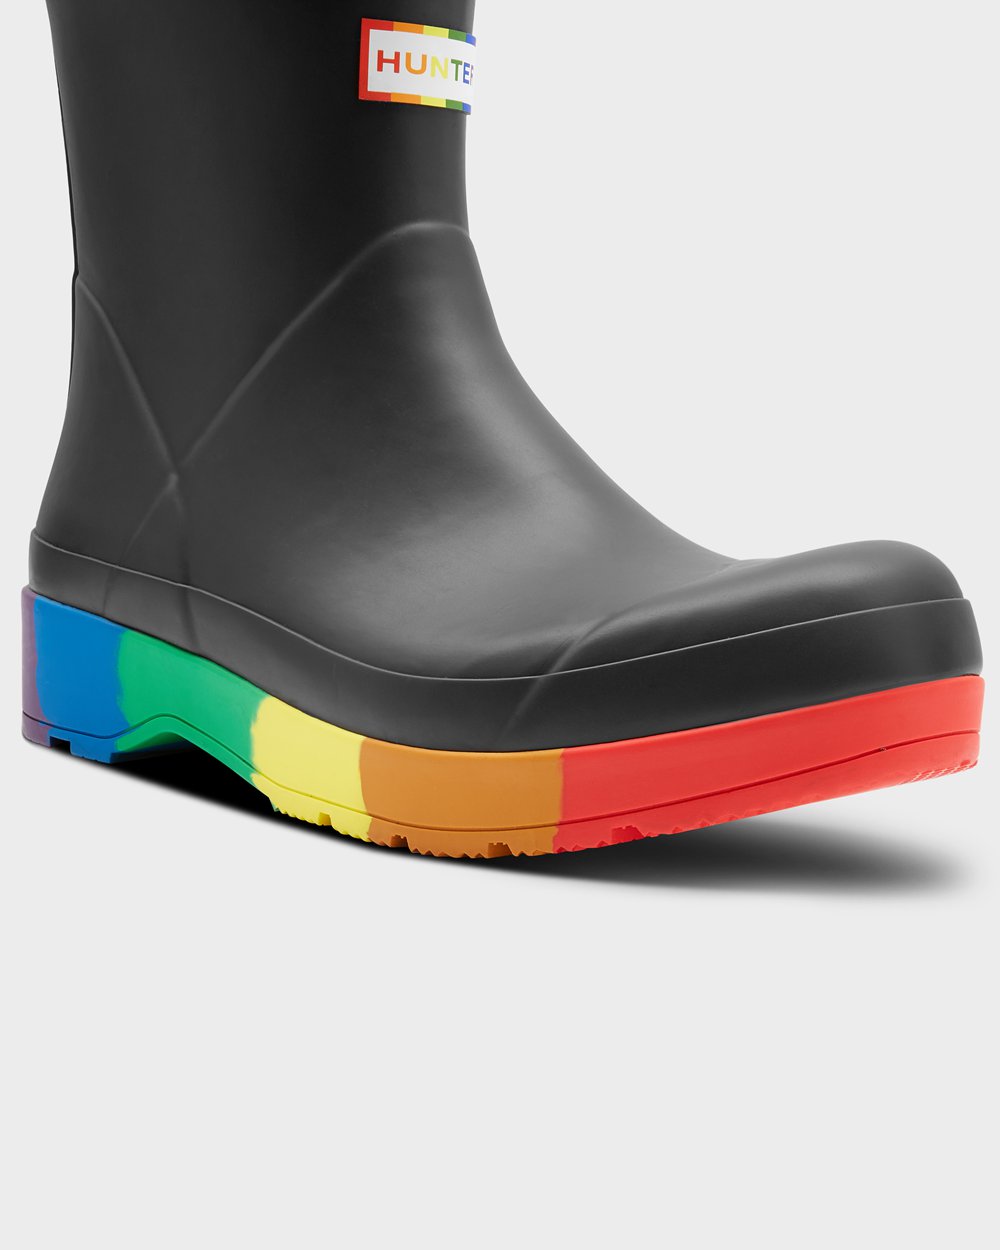 Mens Play Boots - Hunter Original Pride Heeled Rain (59KVHWZOS) - Black